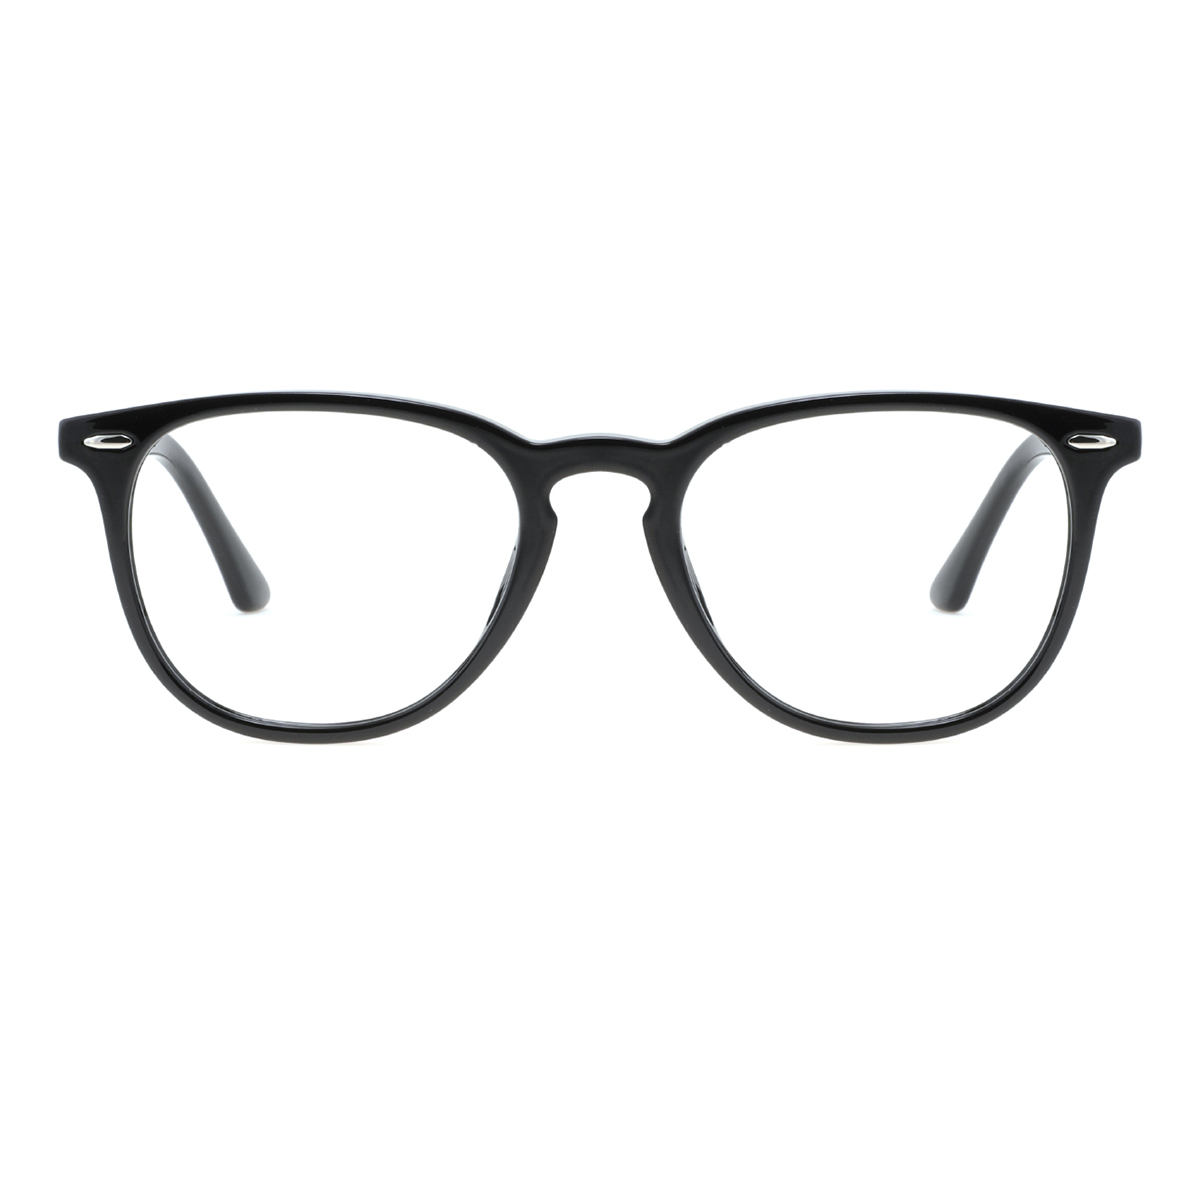 square eyeglasses #729 - black